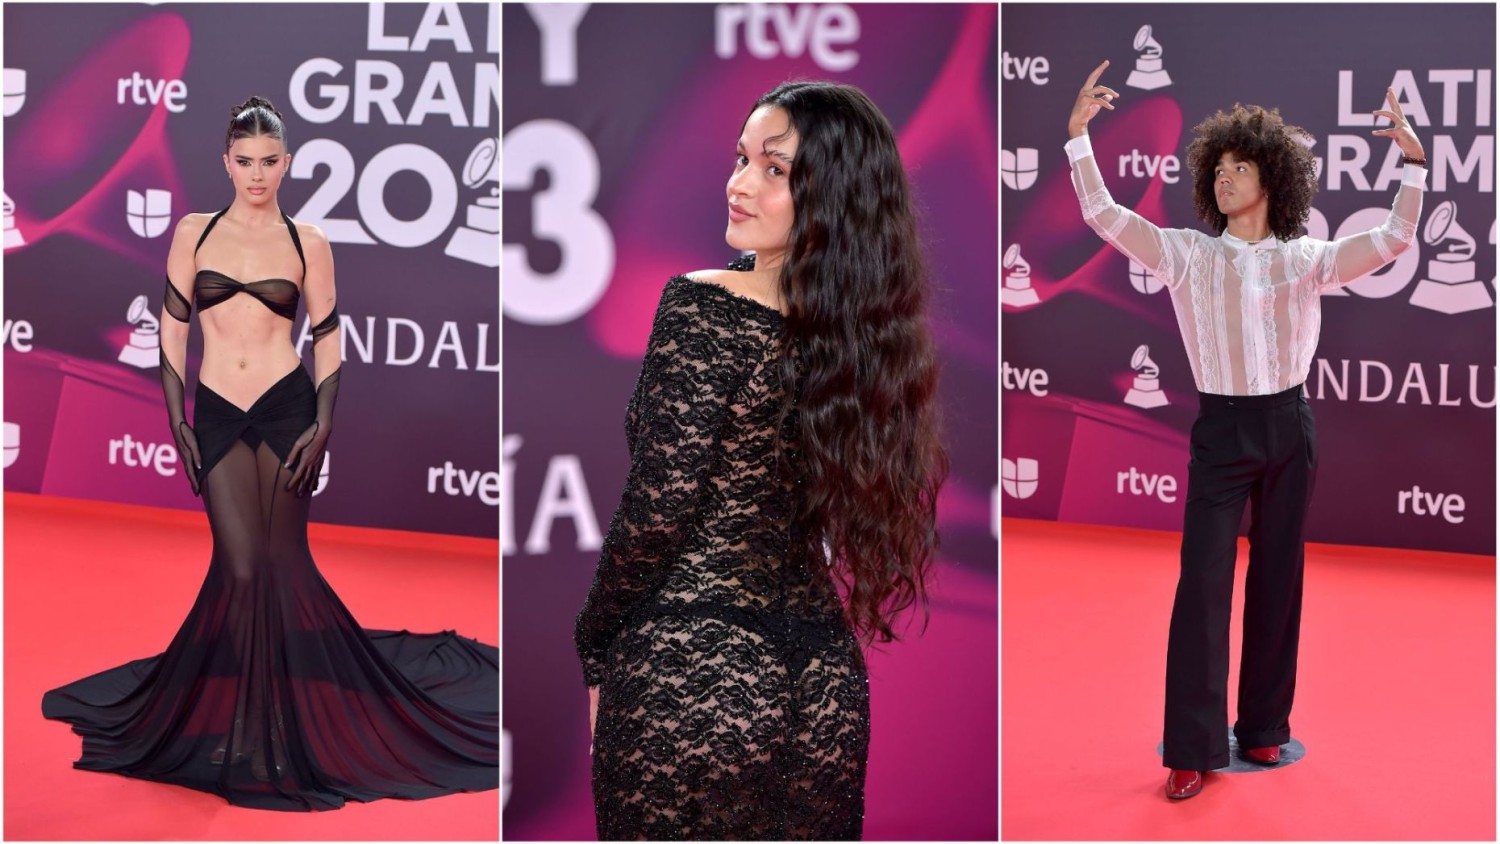 PHOTOS: 2023 Latin Grammy Awards: Red carpet arrivals